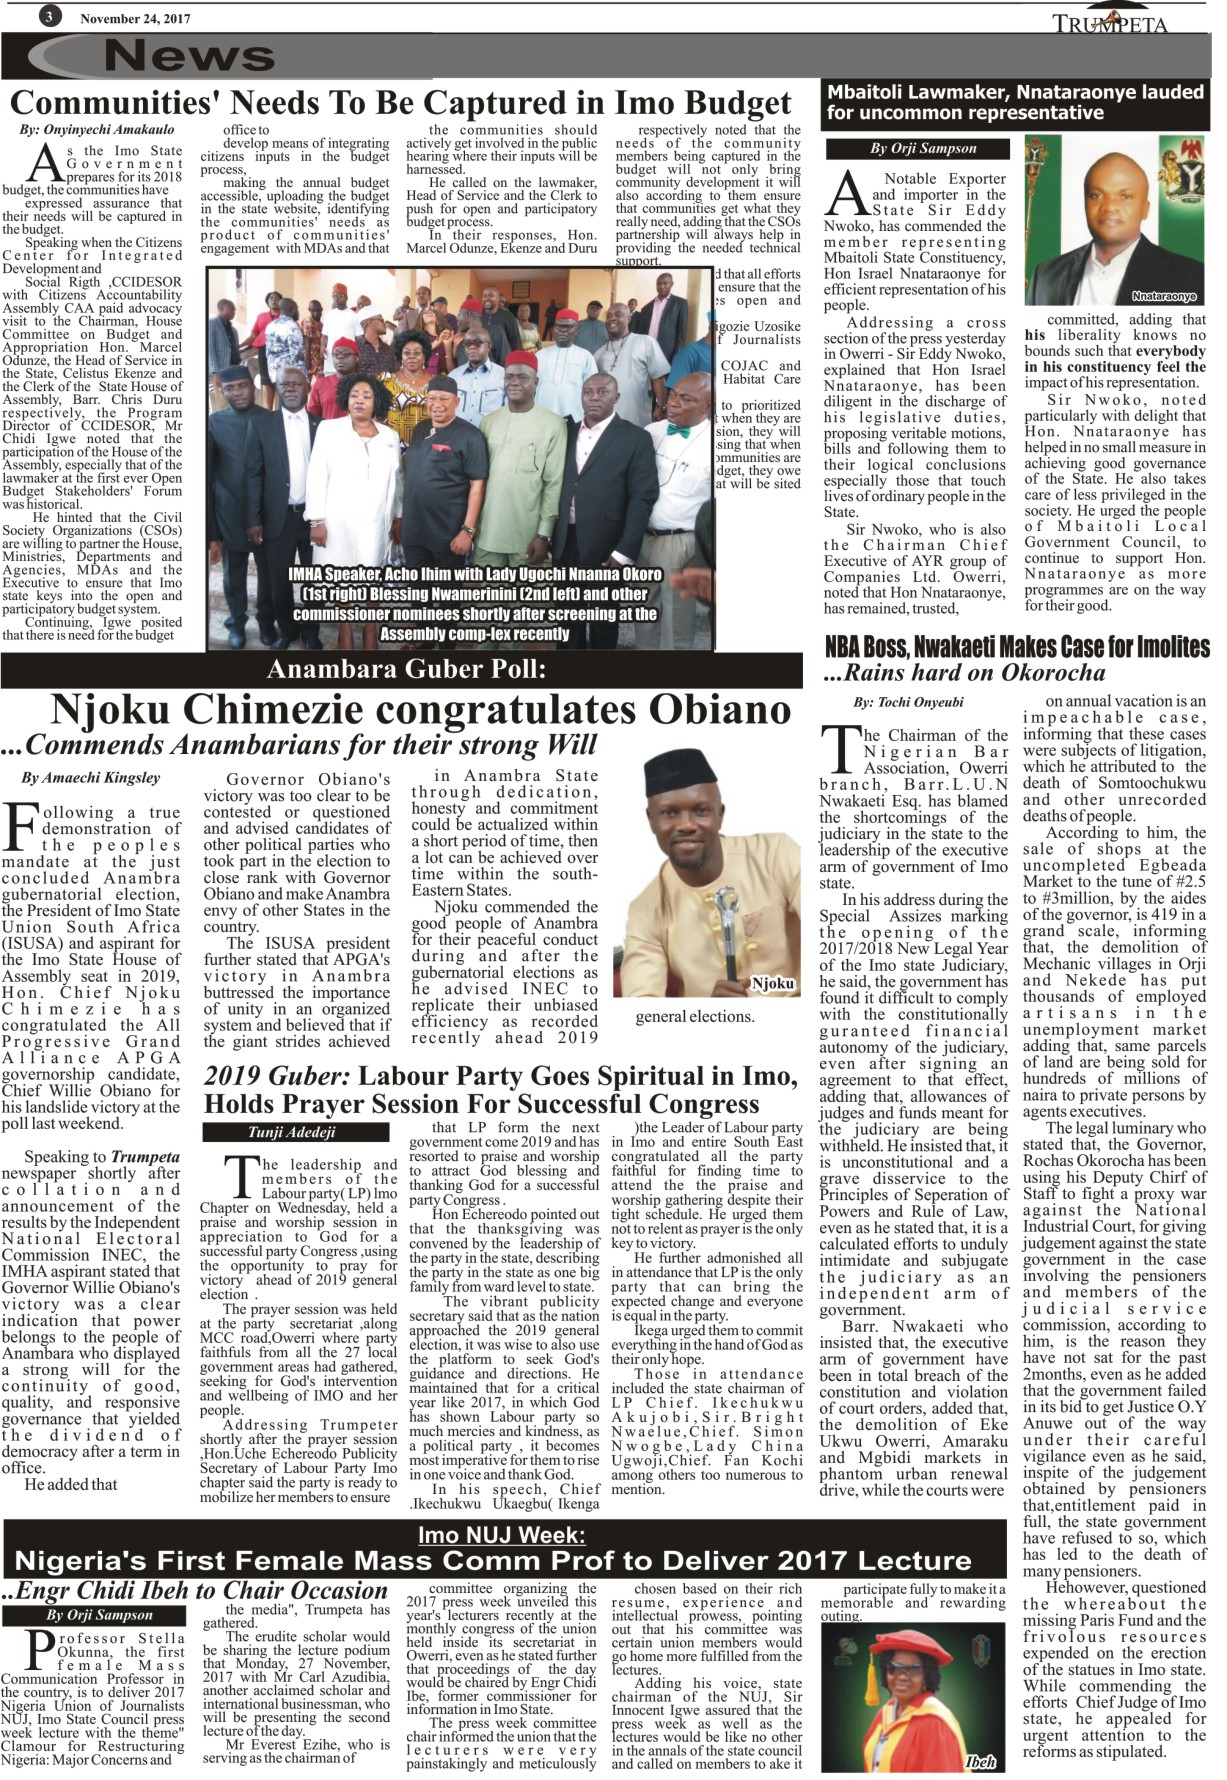 Hon Chimezie Congratulates Obiano news